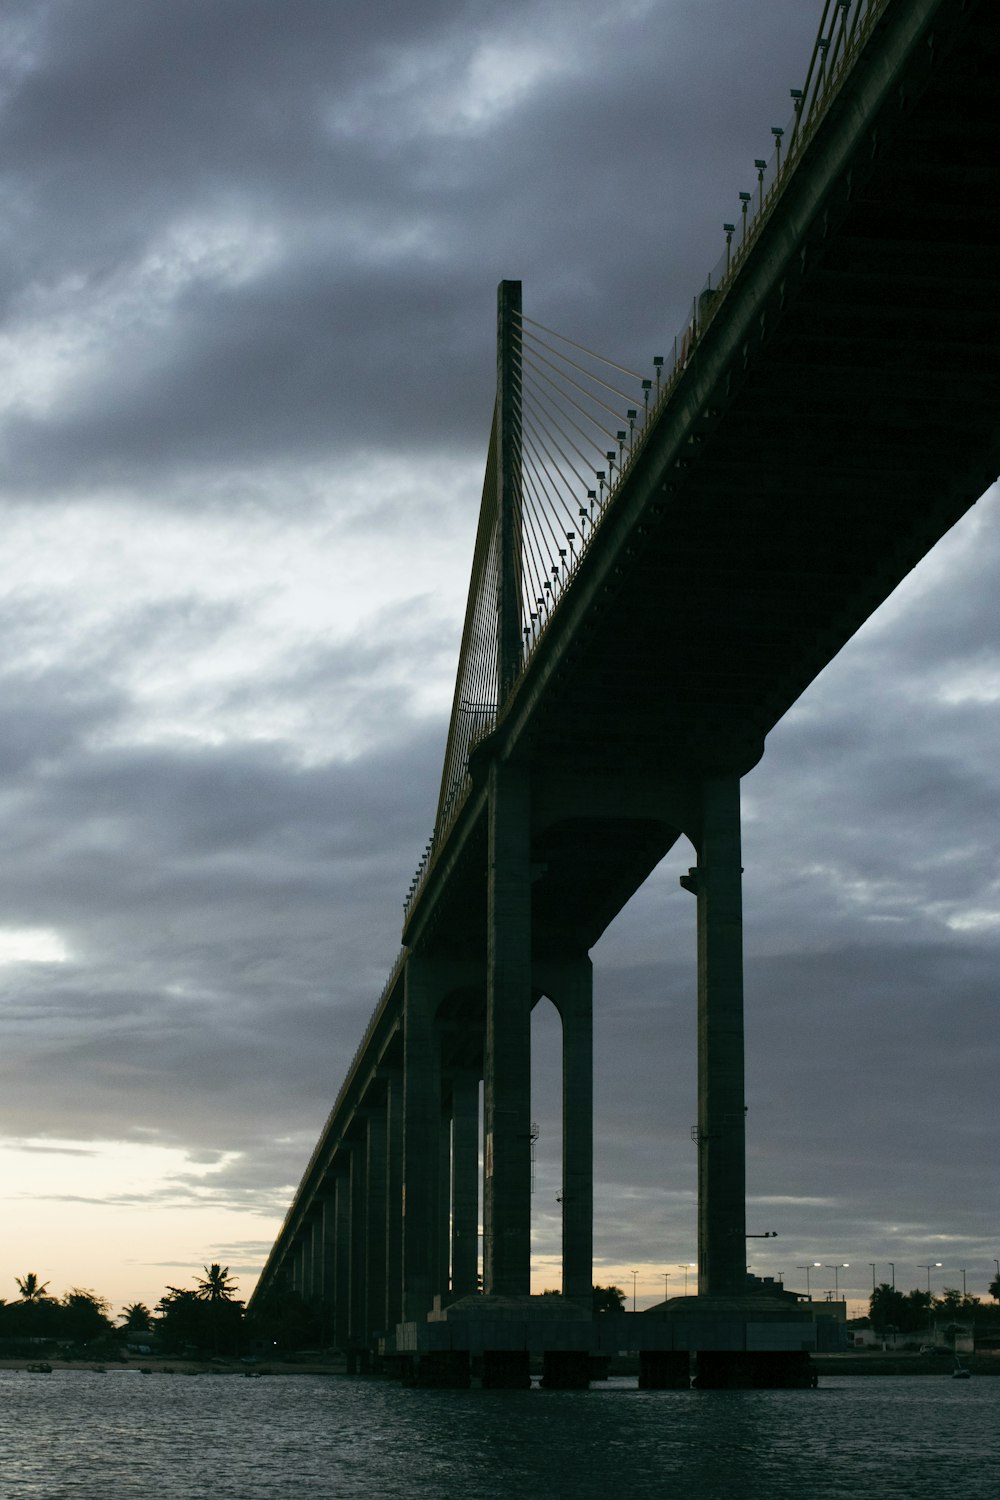 gray concrete bridge under gray clouds during daytime